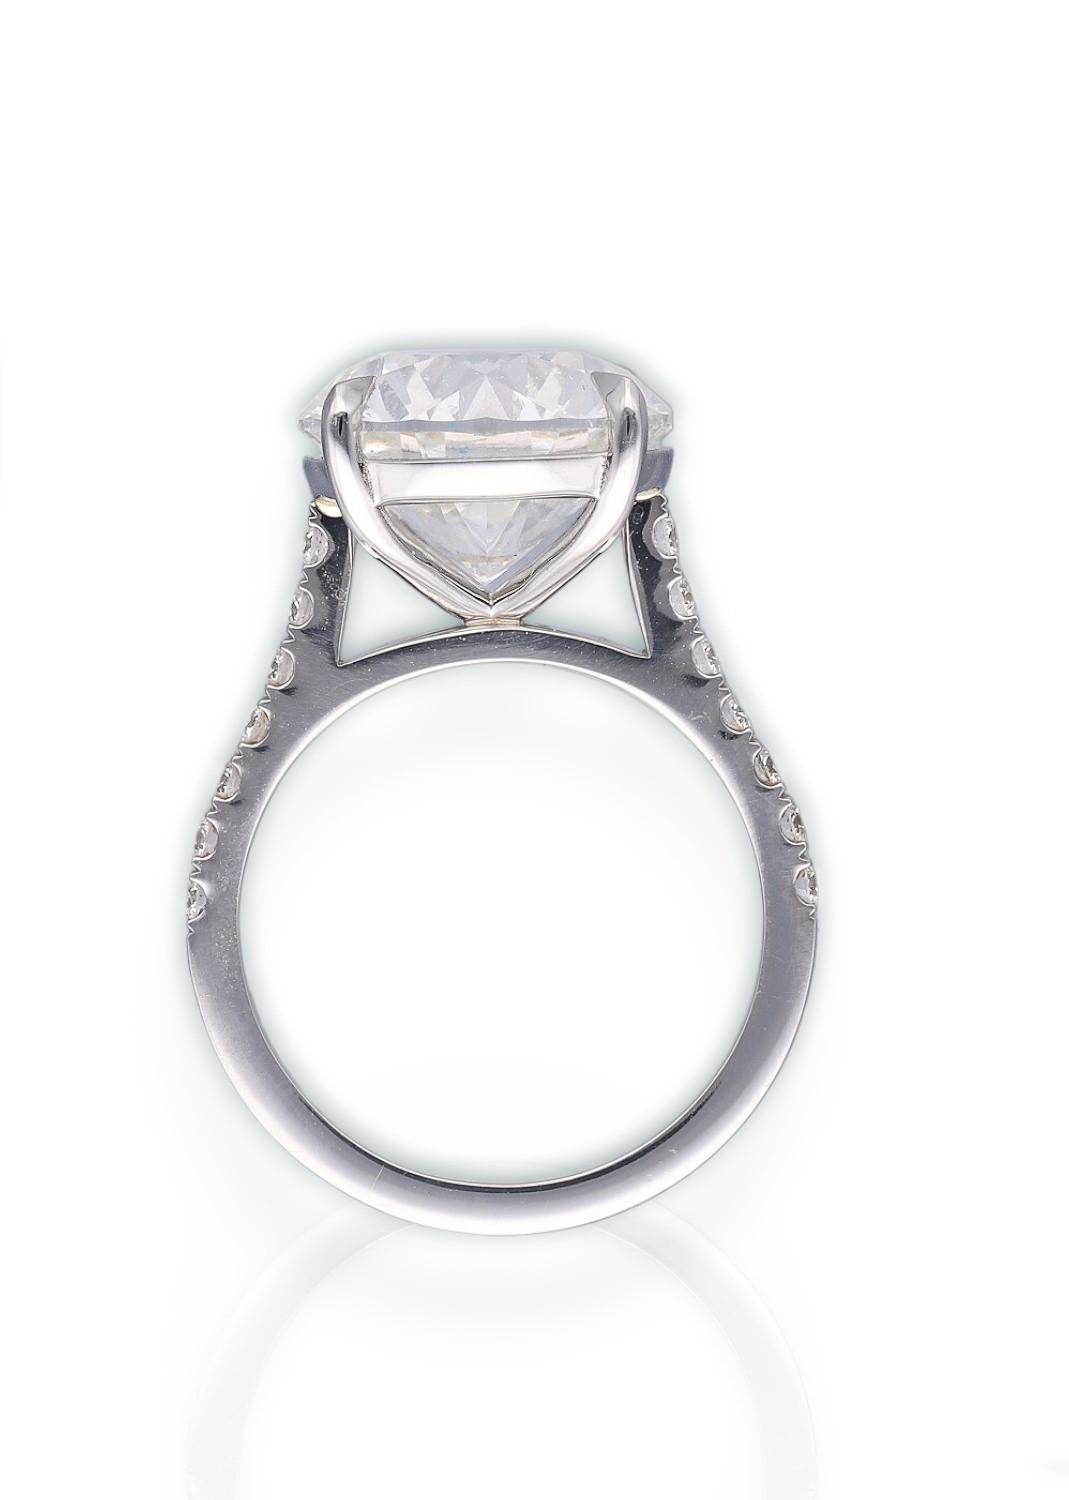 Solitare Round Diamond ring 7ct IGI certified For Sale 1